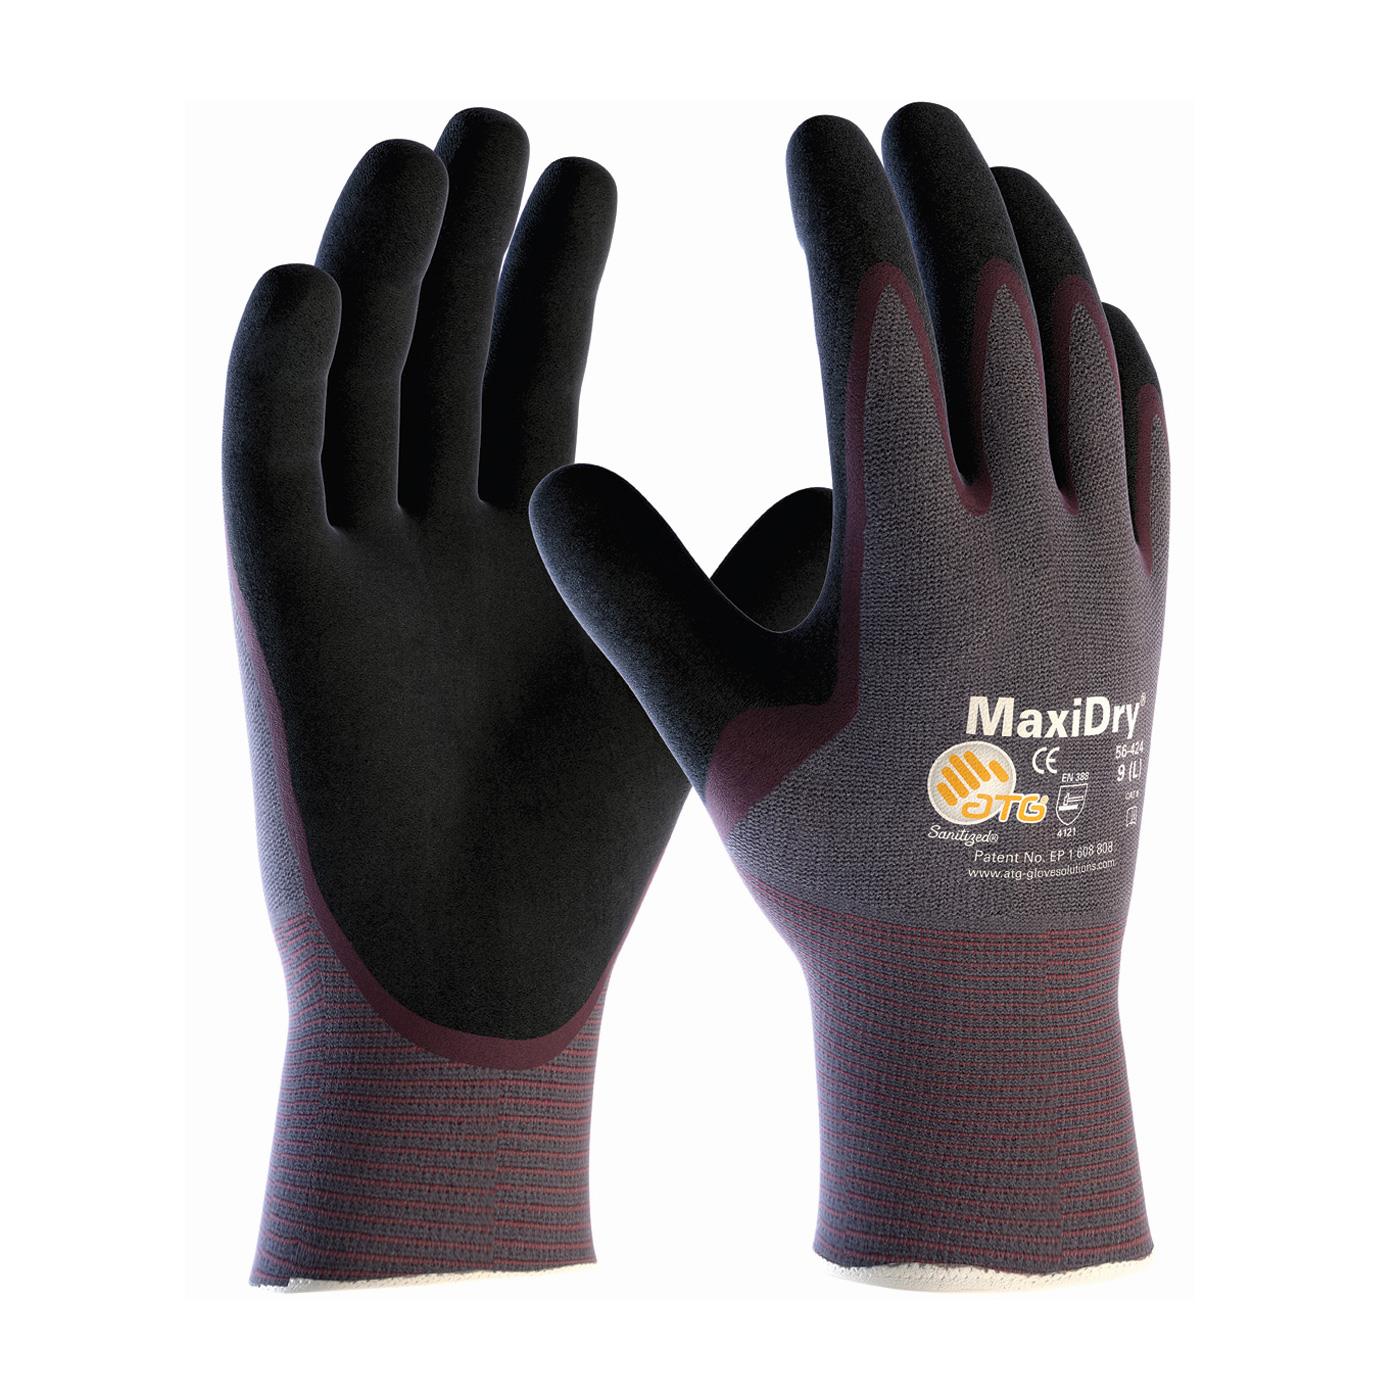 MAXIDRY GRIPTECH NITRILE PALM COAT - Nitrile Coated Gloves